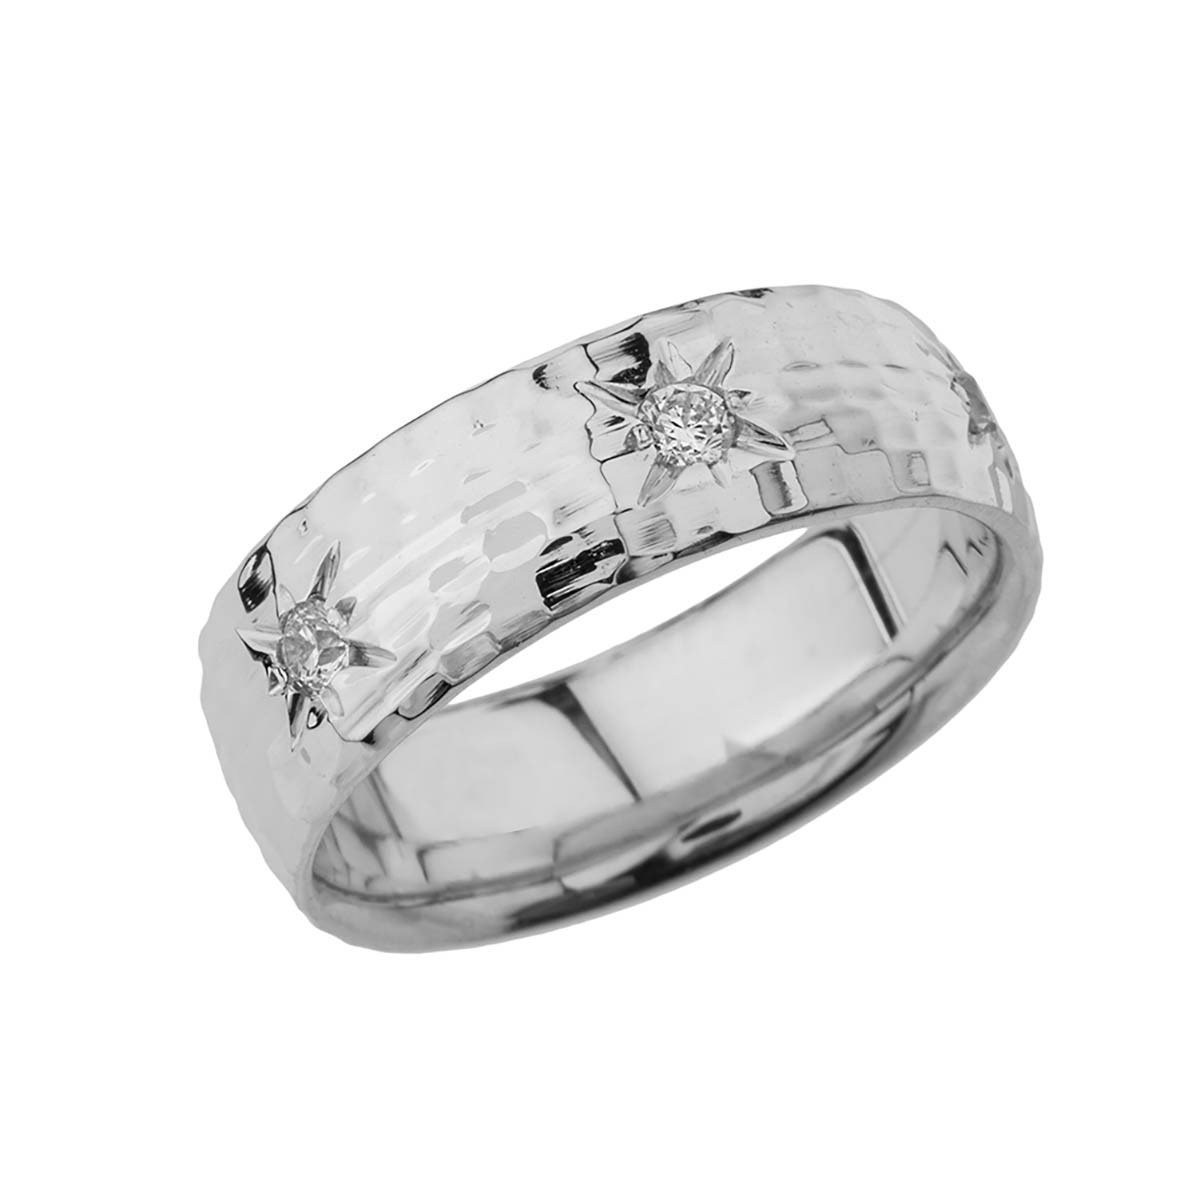 Gold Boutique - Men's Wedding Ring in White GOOFASH